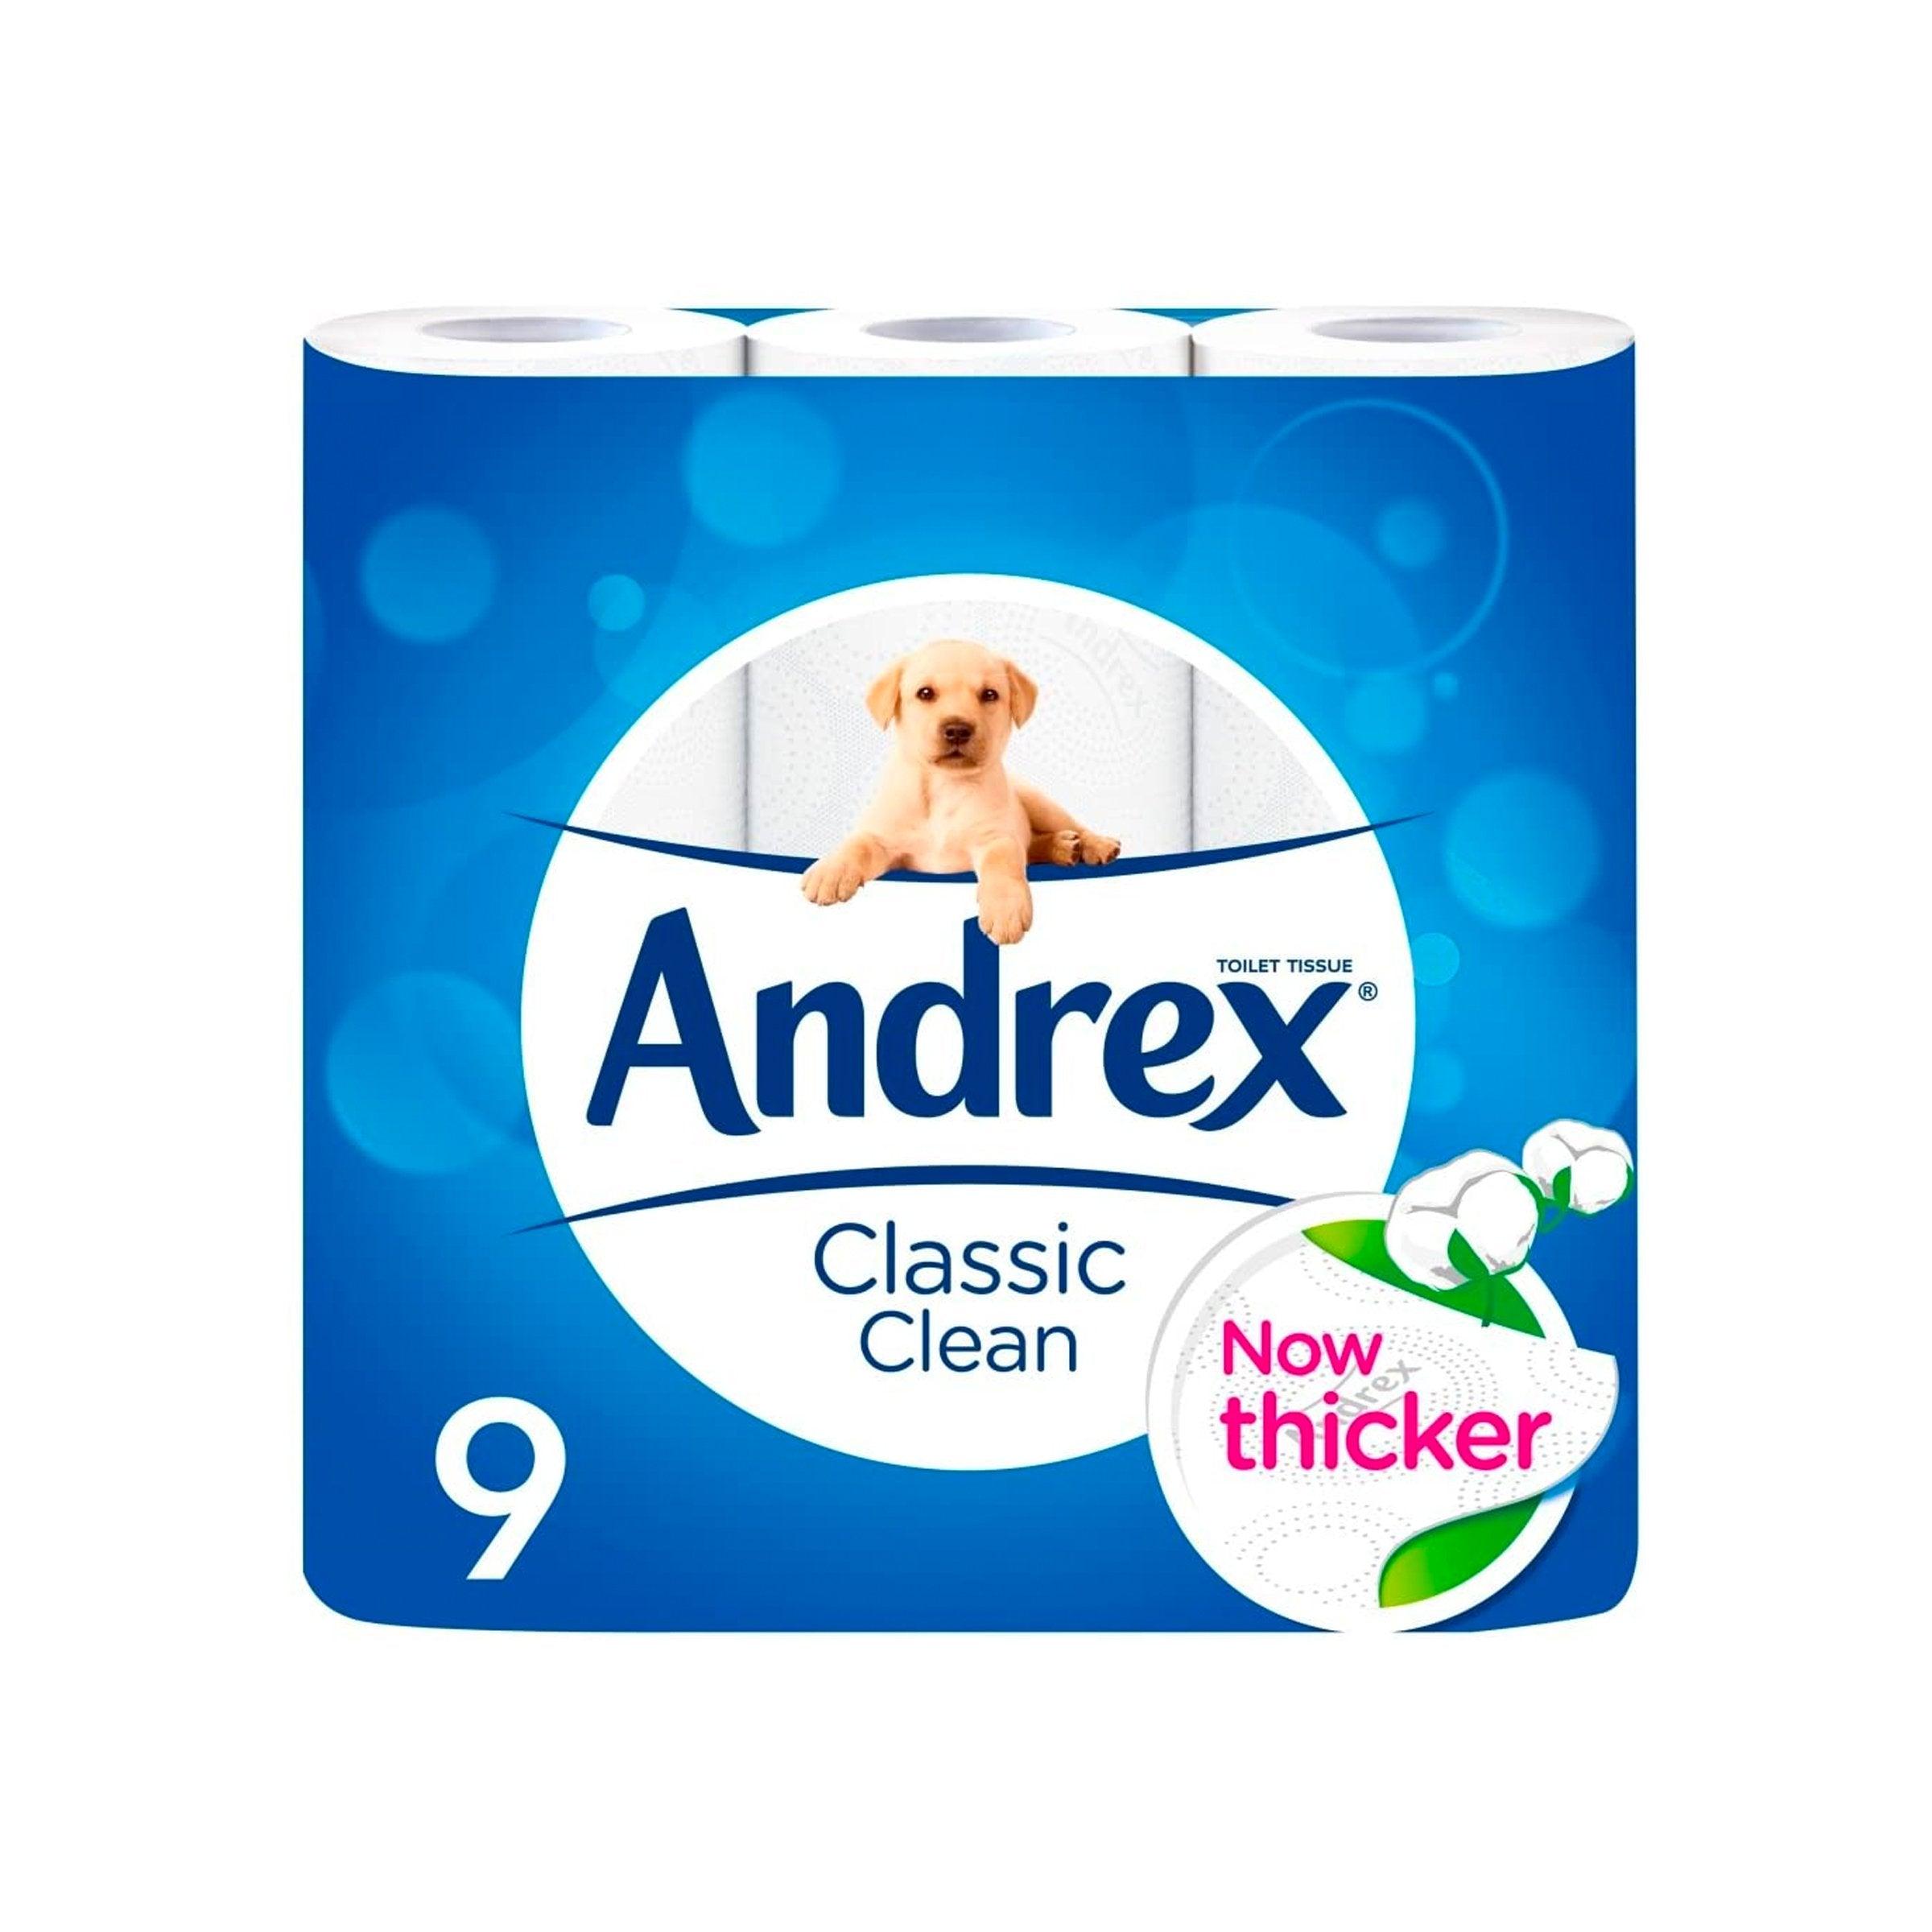 Andrex Classic Clean Toilet Tissue 9 Rolls - Vending Superstore